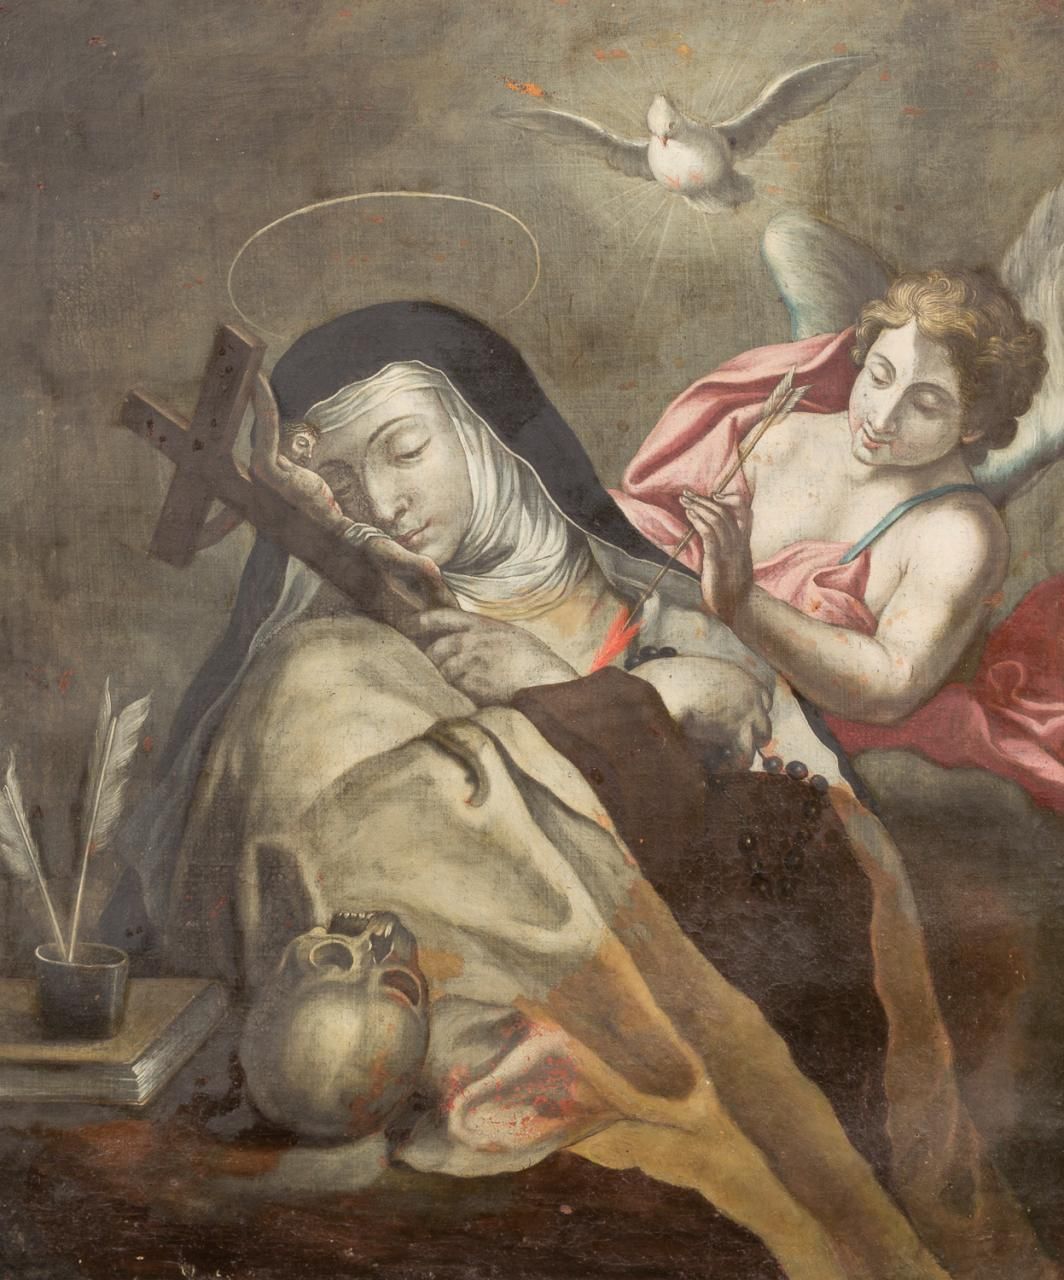 ESCUELA ITALIANA, S. XVII Estasi di Santa Teresa
Olio su tela
77 x 64 cm